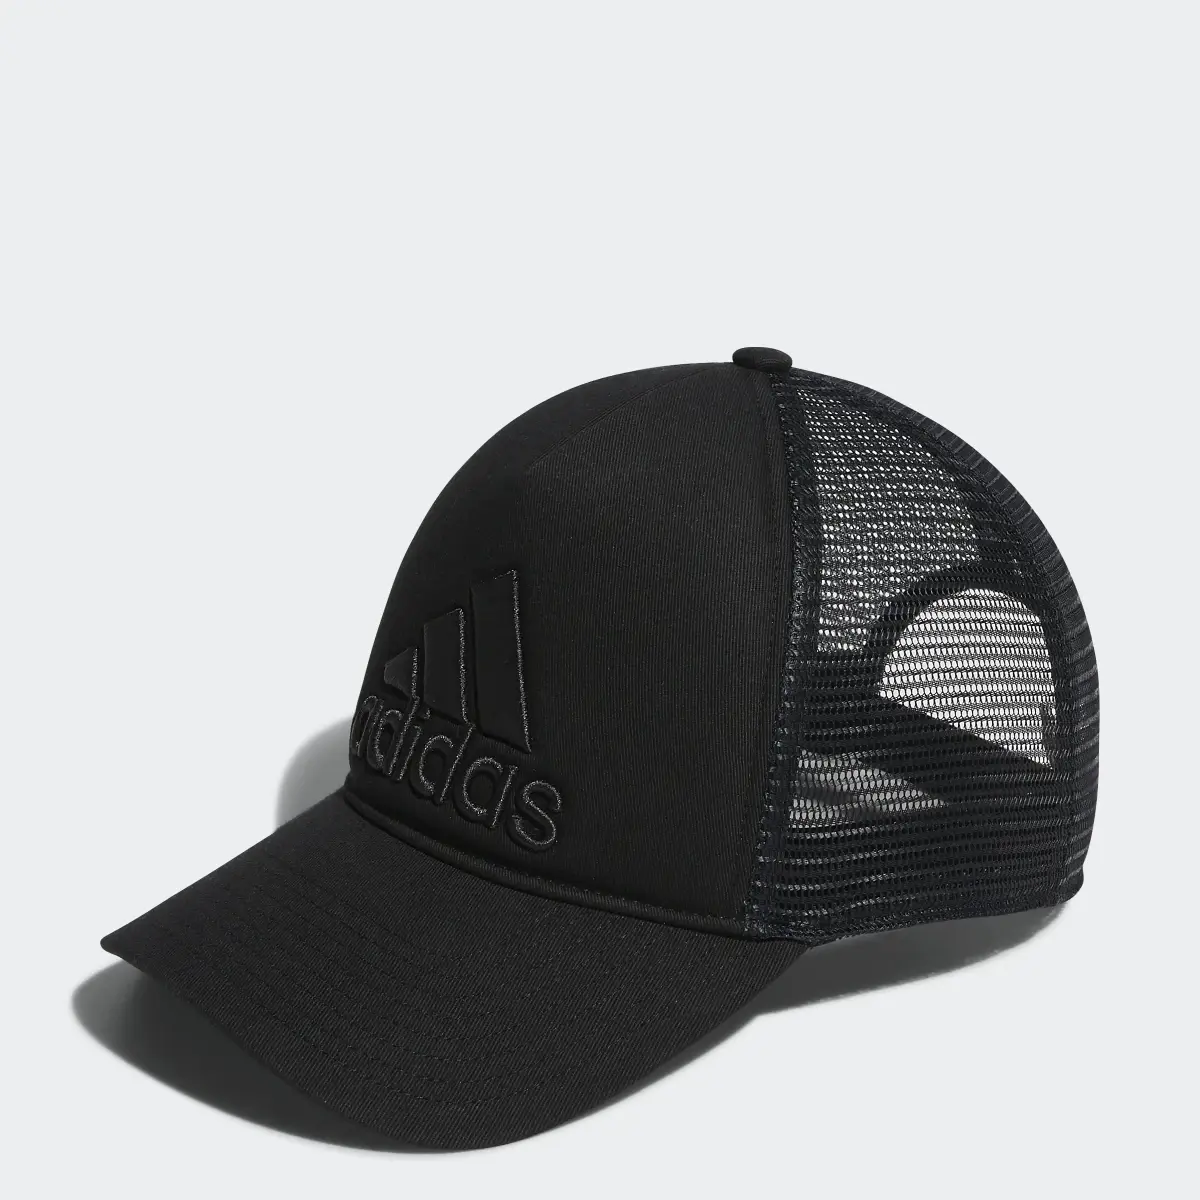 Adidas Trucker Cap. 1